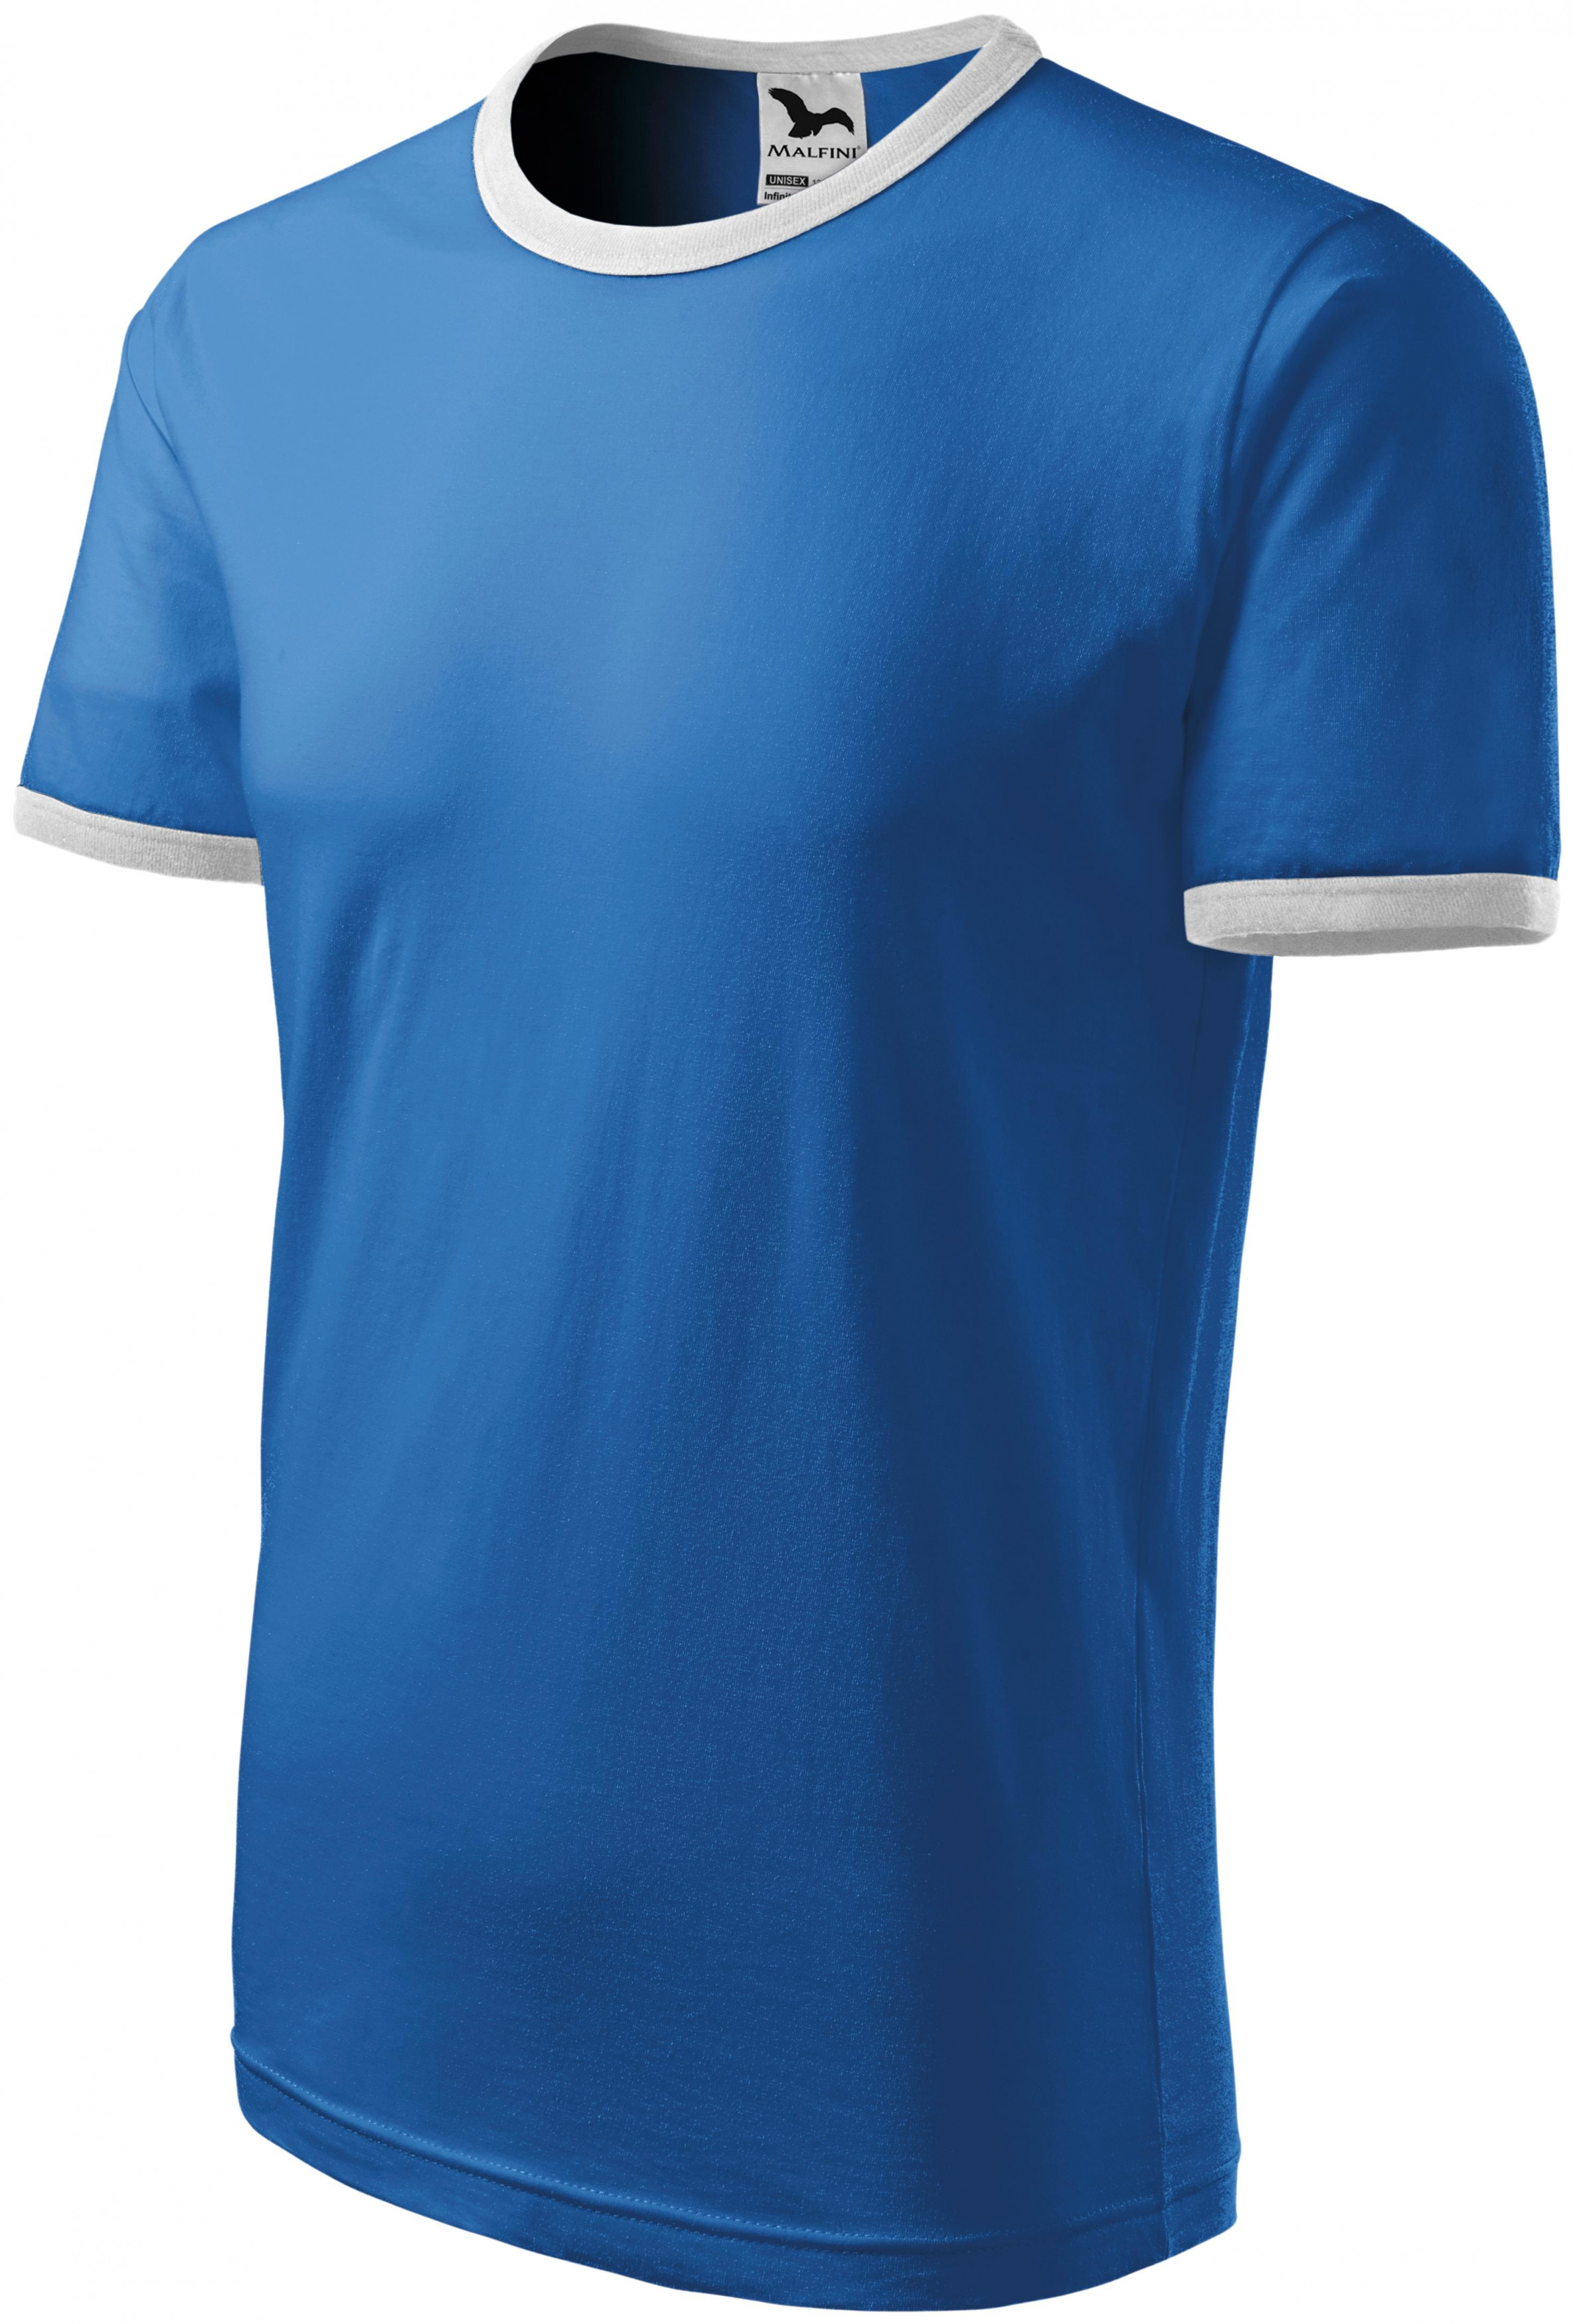 Unisex tričko kontrastné, svetlomodrá, XL